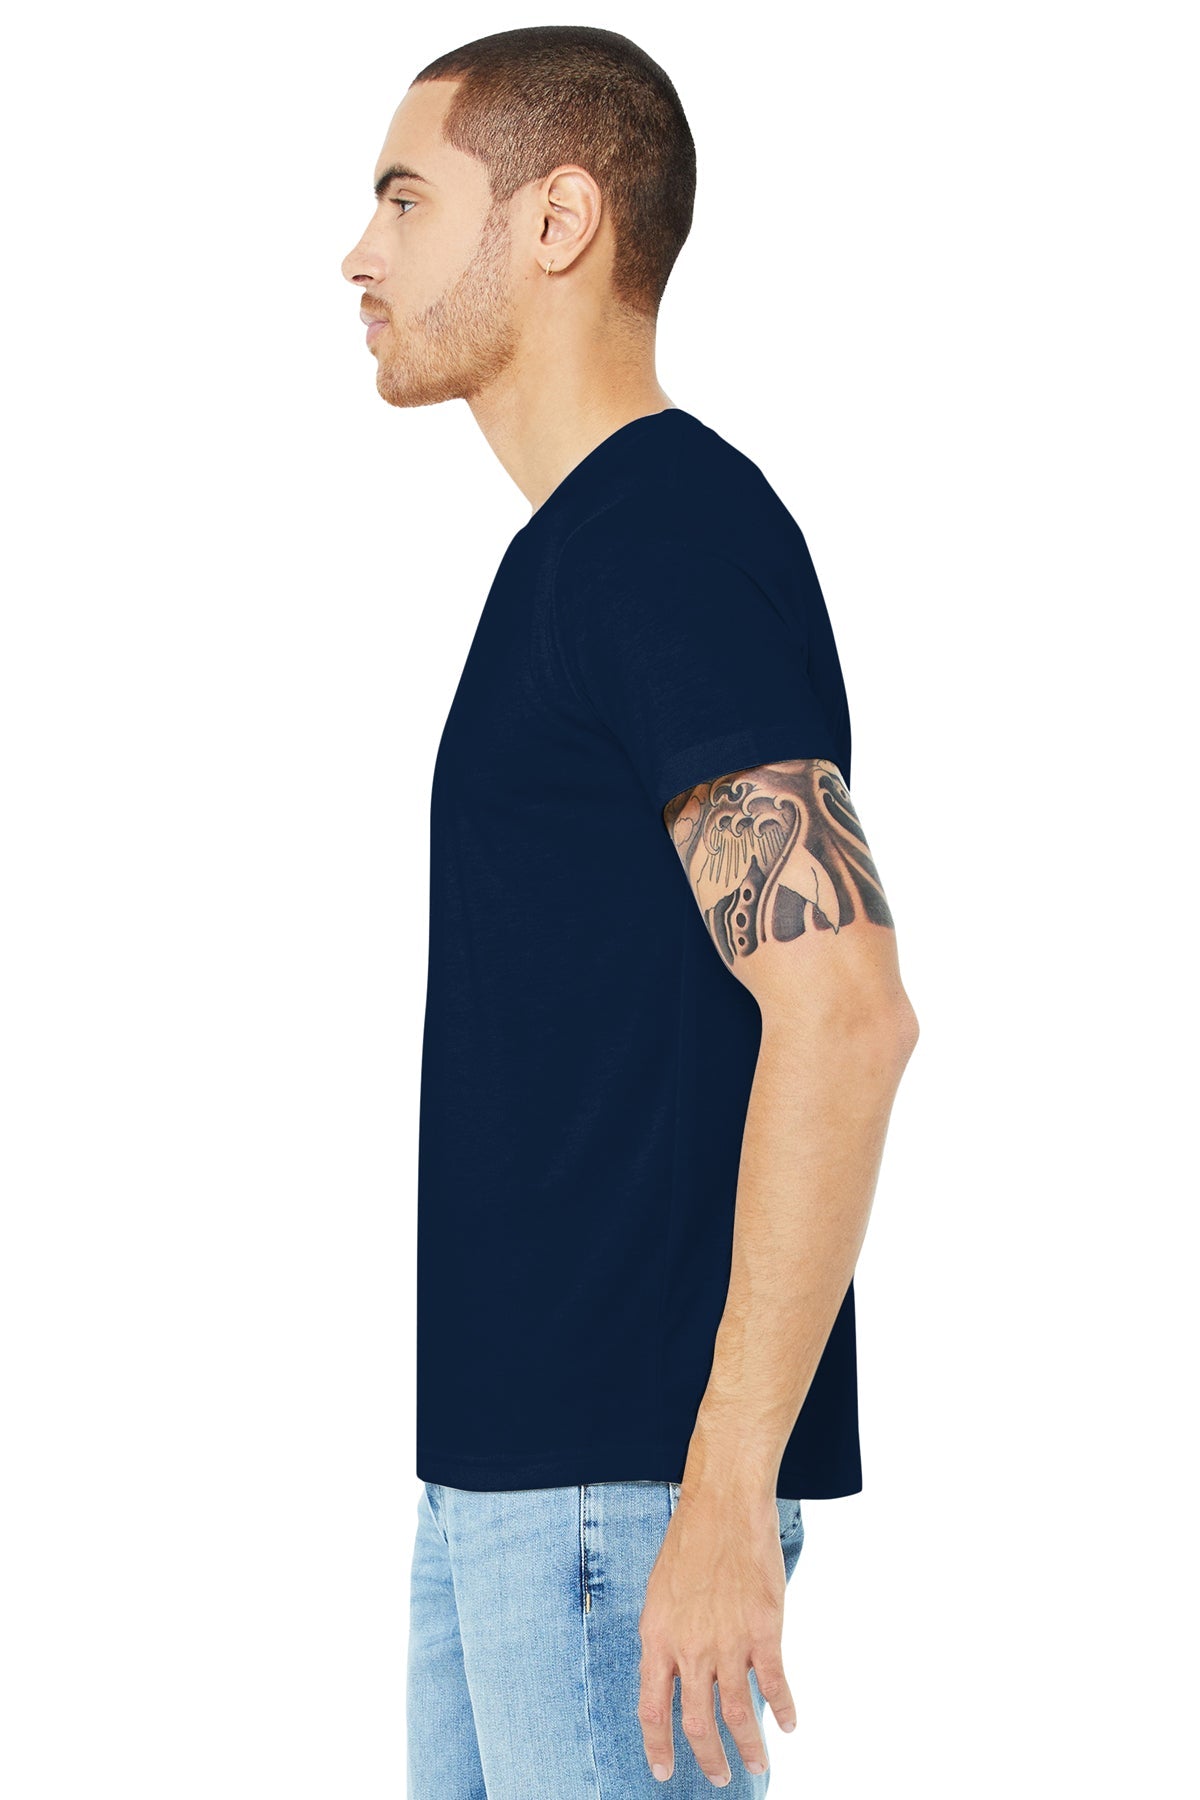 bella + canvas unisex made in the usa jersey short sleeve t-shirt 3001u navy